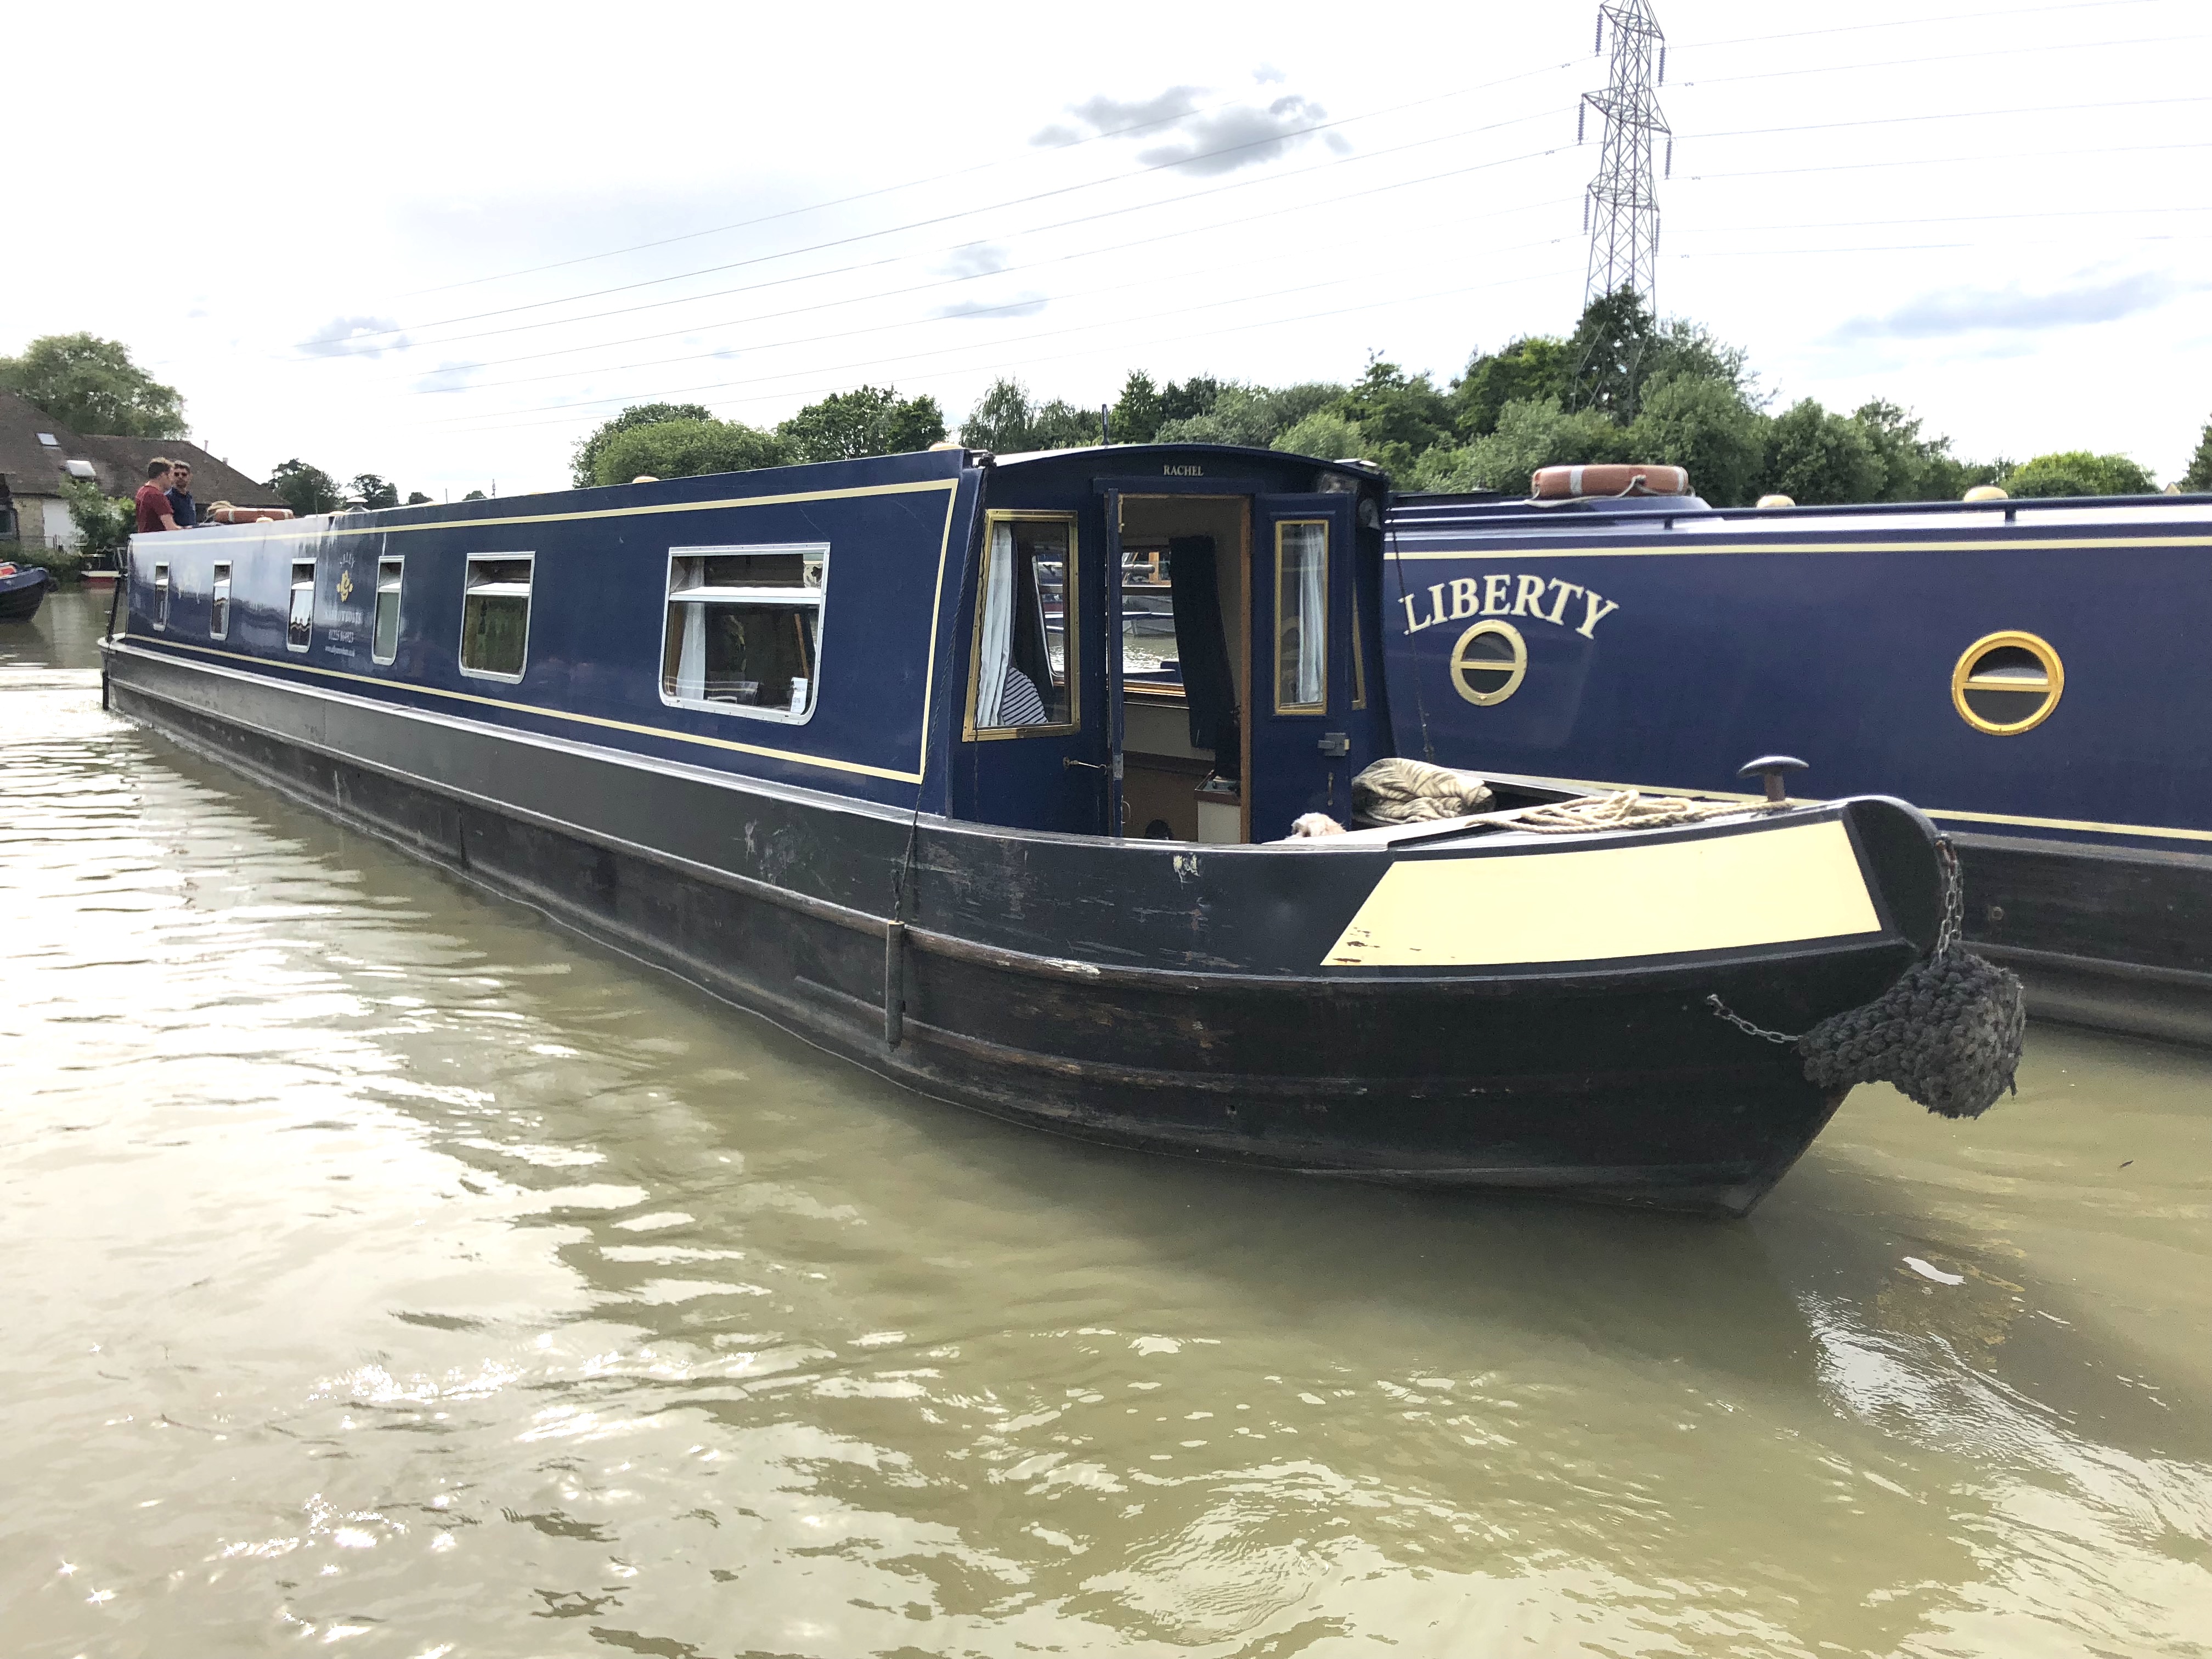 The S-Rachel class canal boat